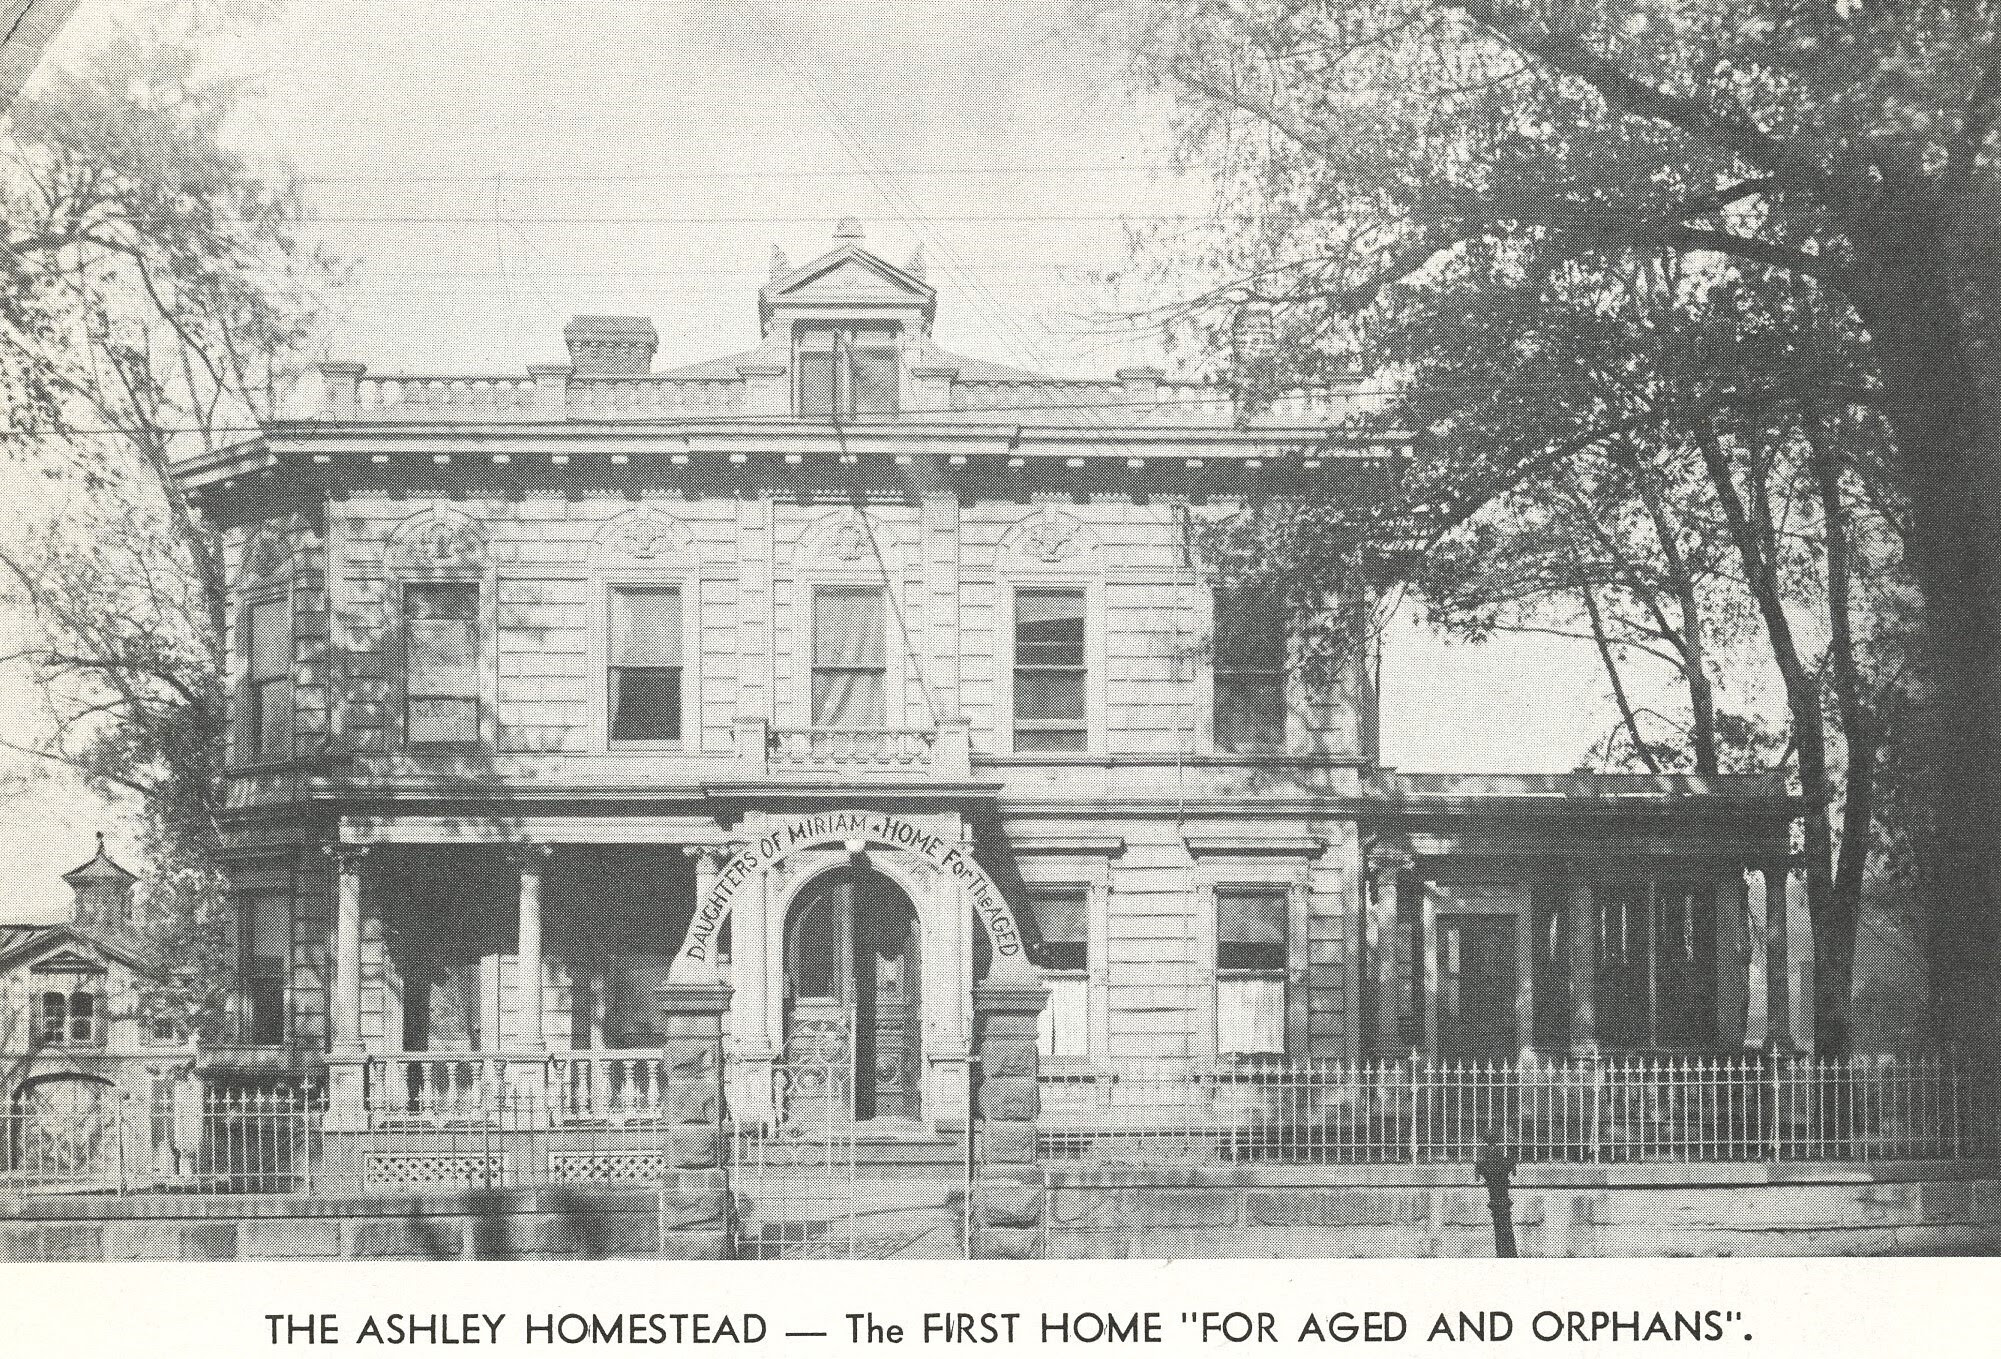 The Ashley Homestead